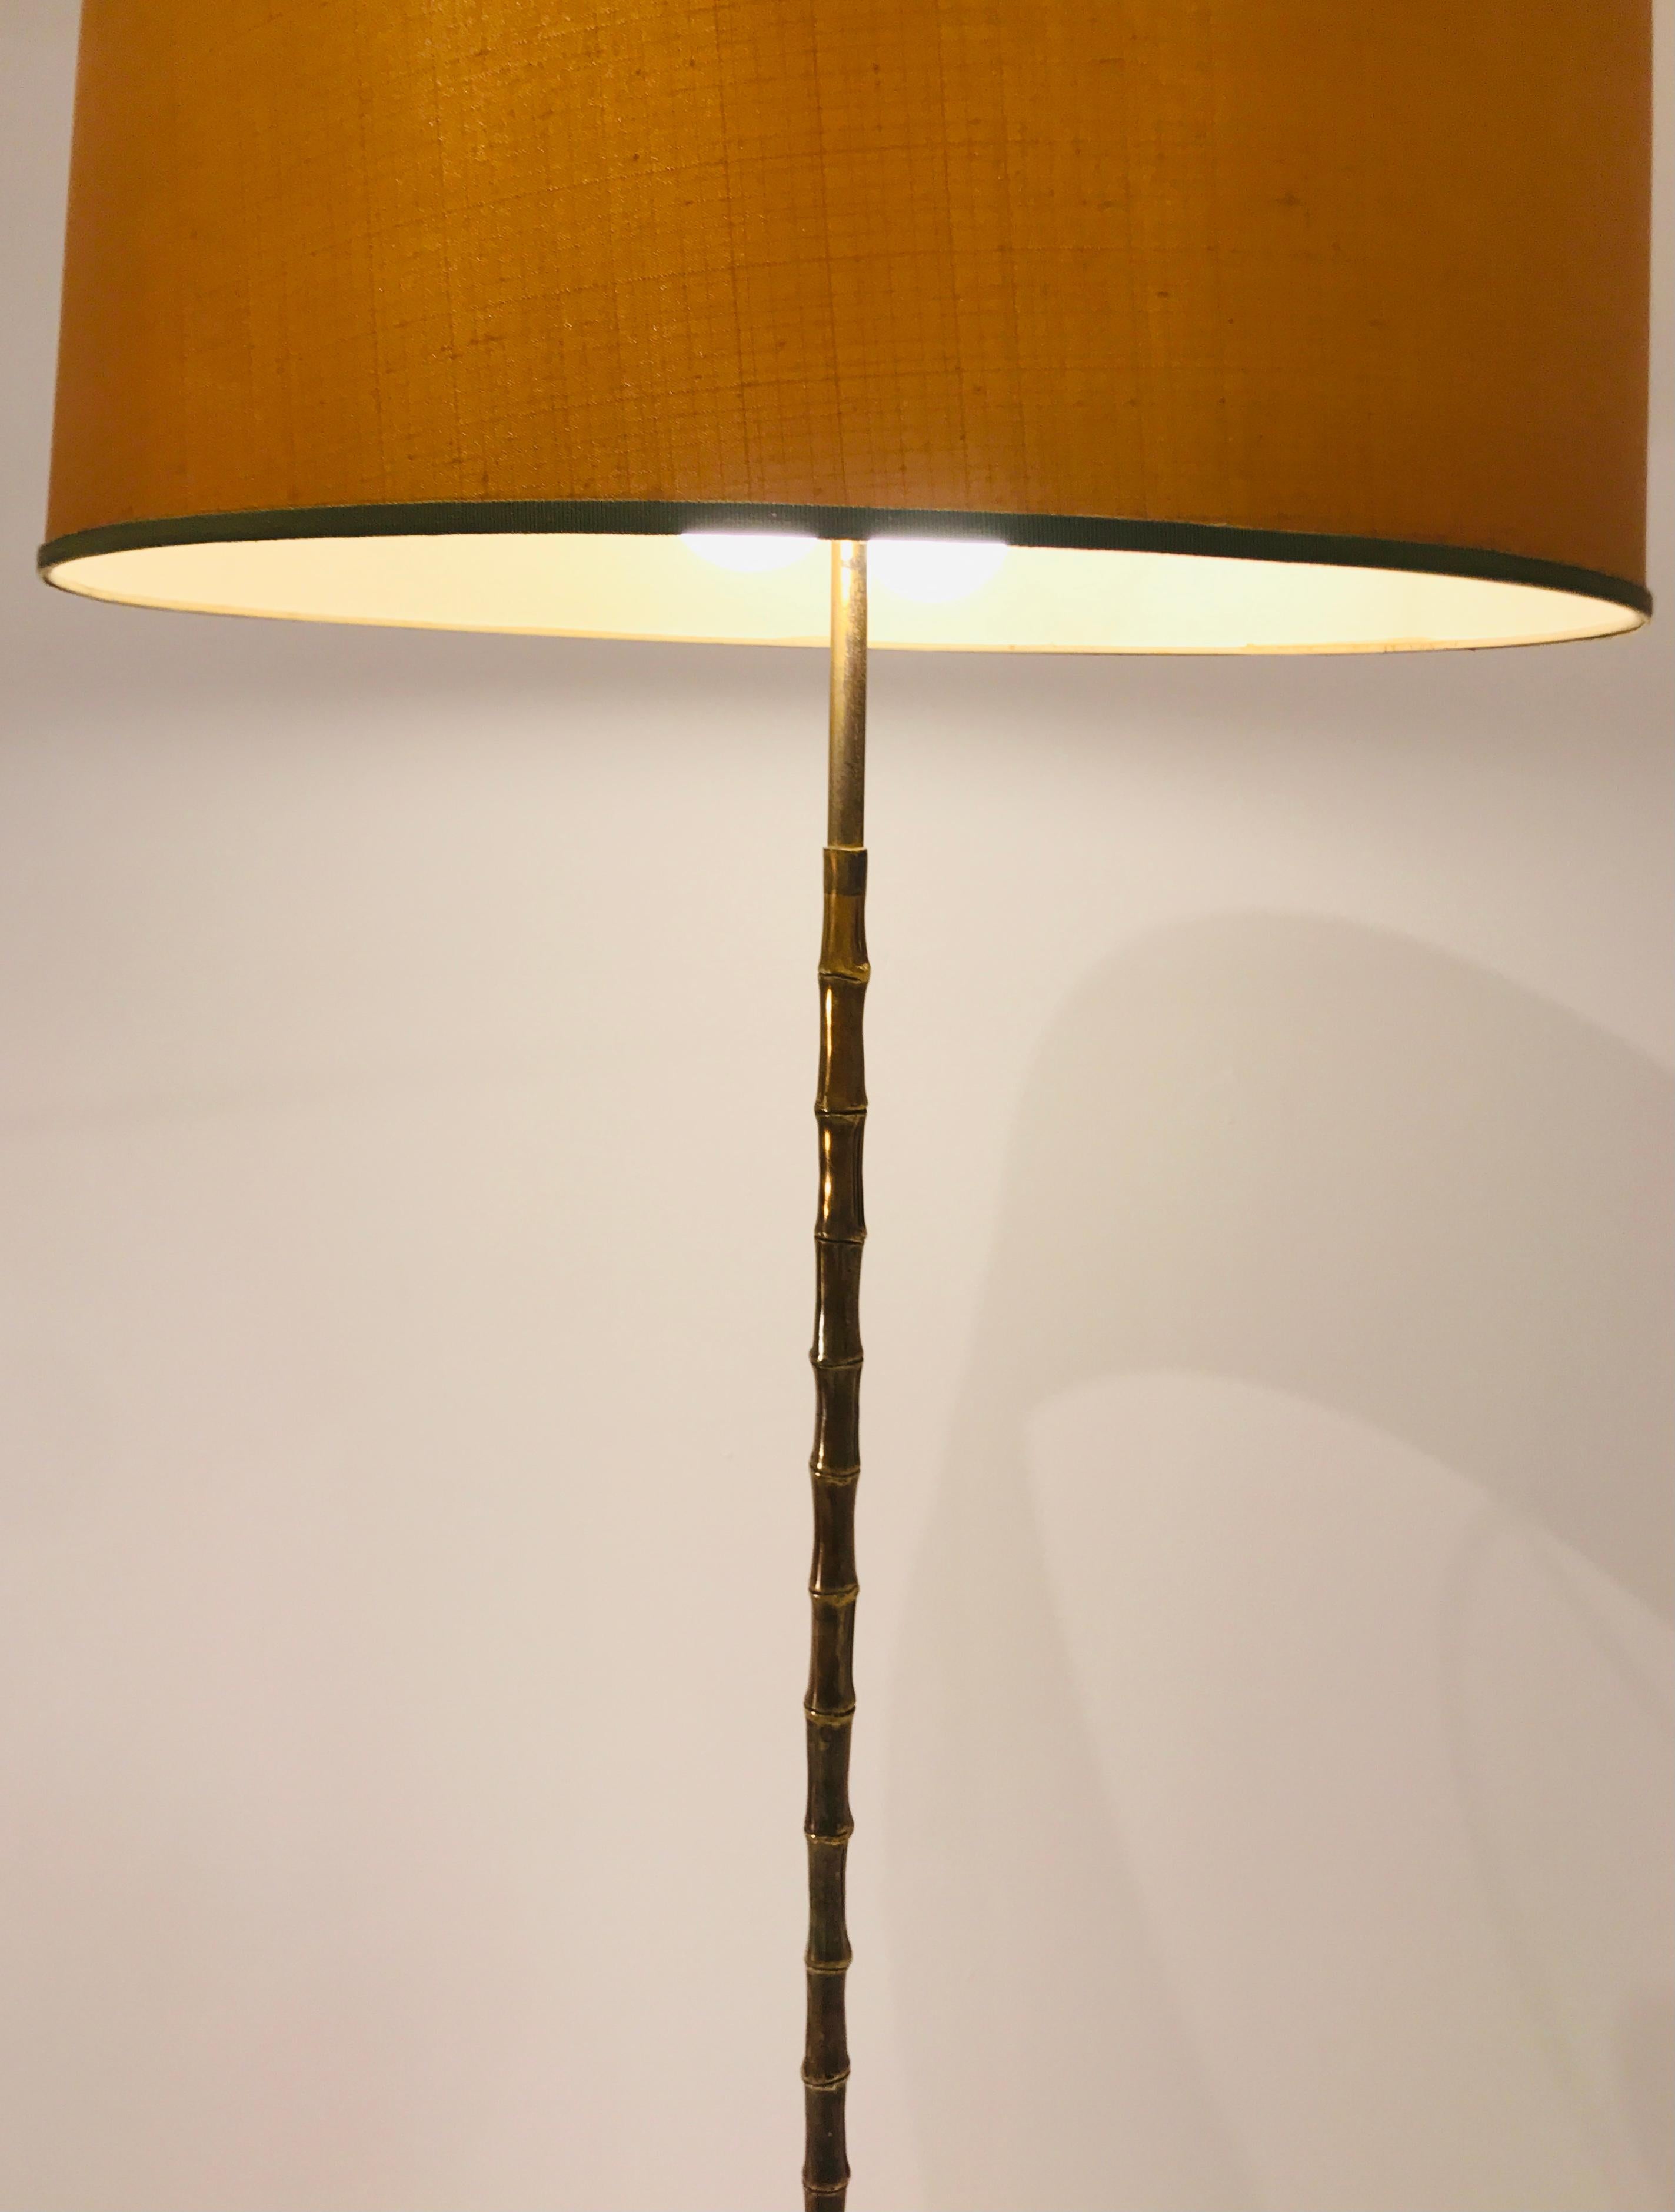 Floor lamp by Maison Baguès, faux bambou, bronze, circa 1950.
New rewired.
Dimensions : 50cm x 168cm H
Without shade 37cm x 168cm H.